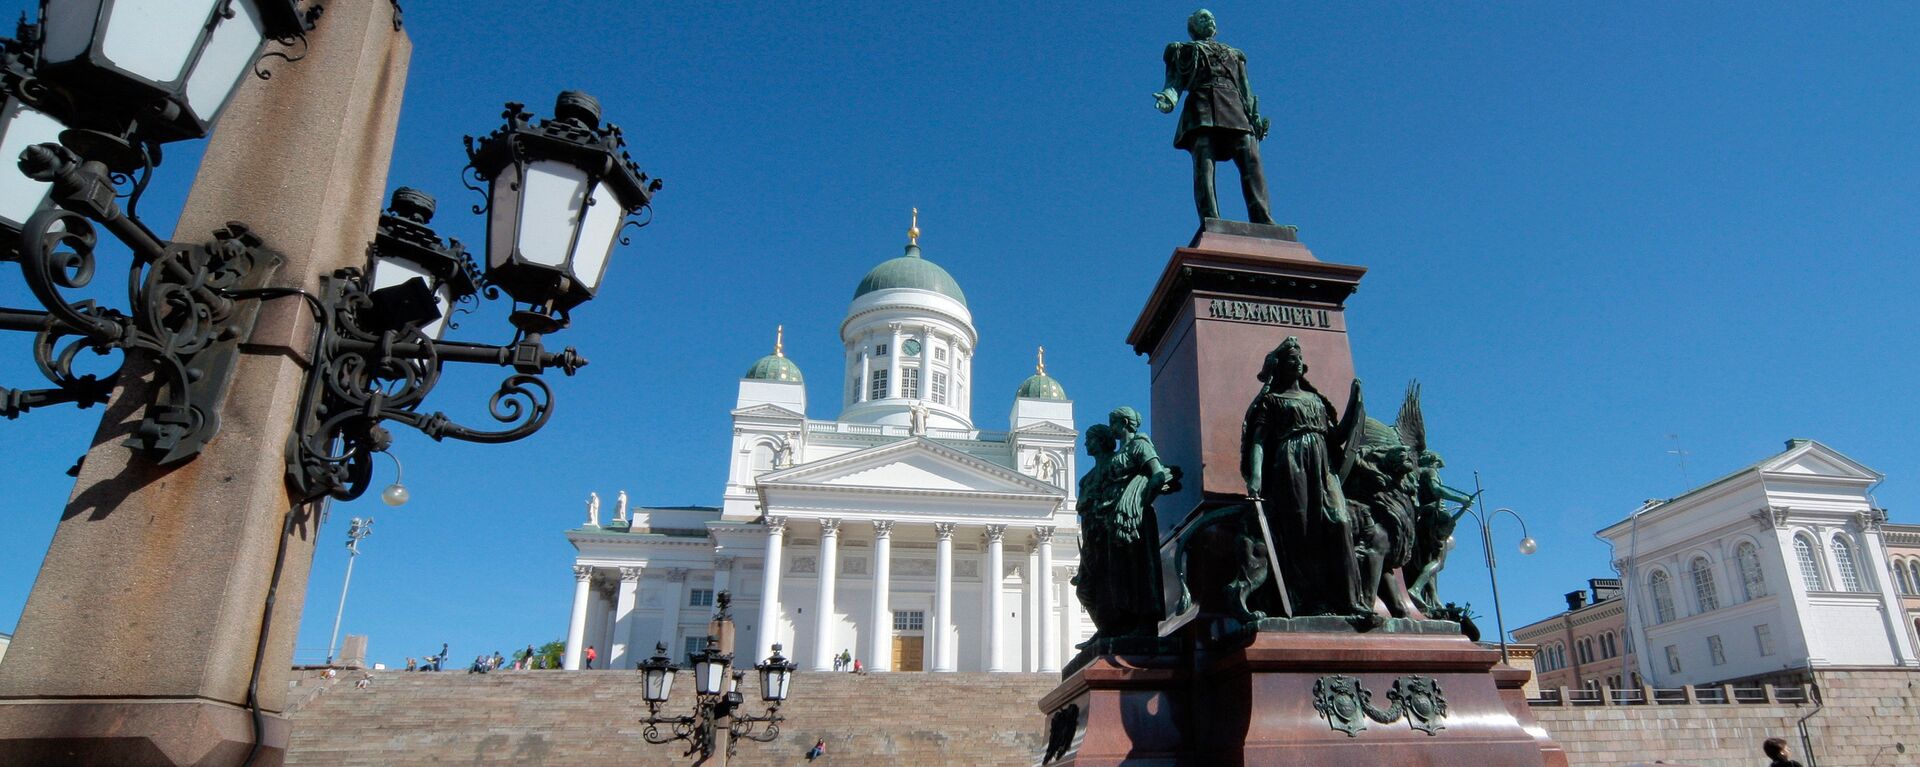 Finland. Helsinki. Monument to Emperor Alexander II on the Cathedral square. - Sputnik International, 1920, 25.02.2020